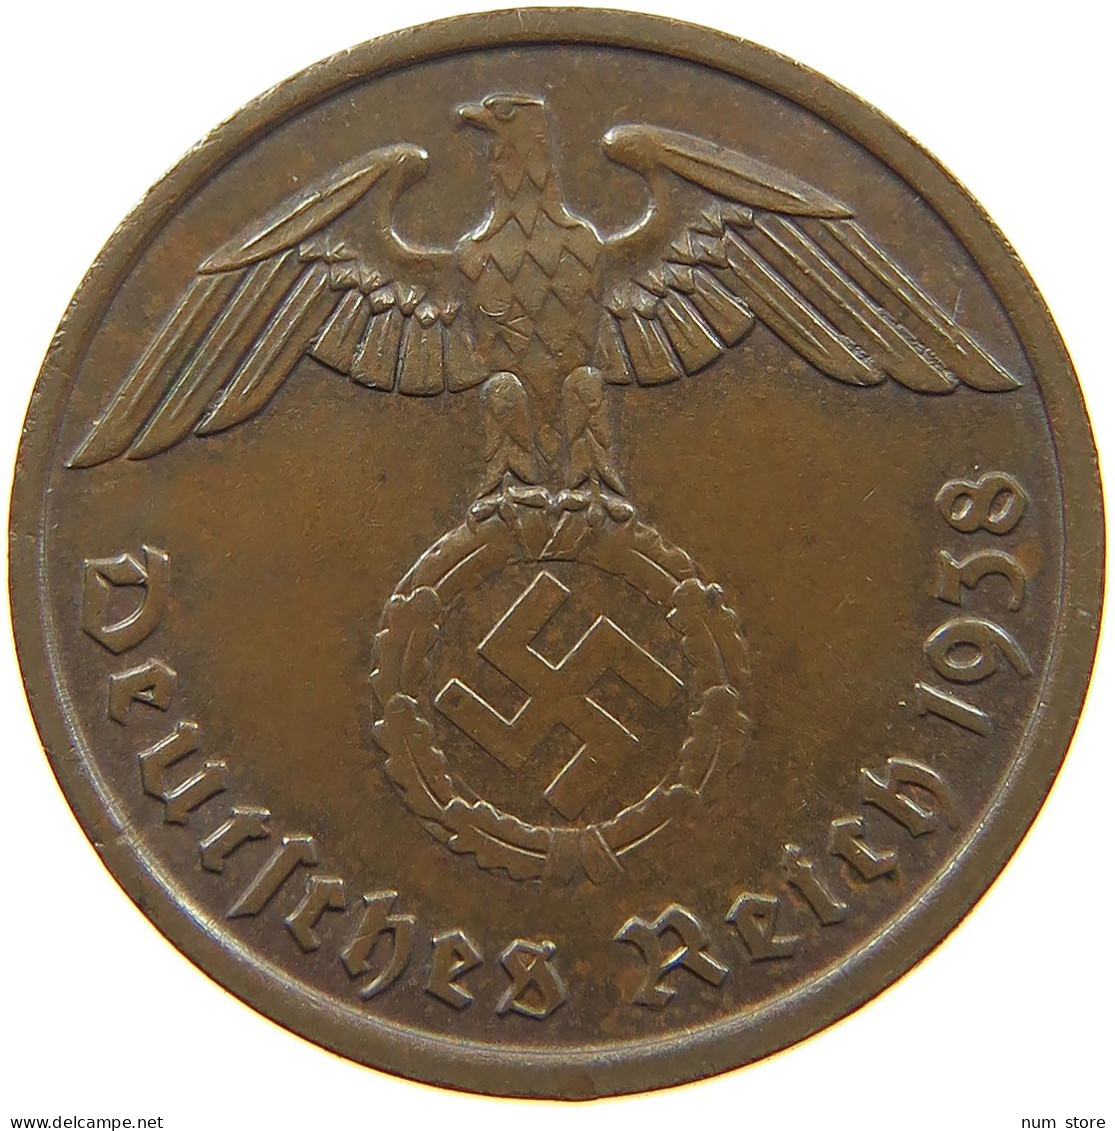 GERMANY 2 PFENNIG 1938 A #c083 0131 - 2 Reichspfennig